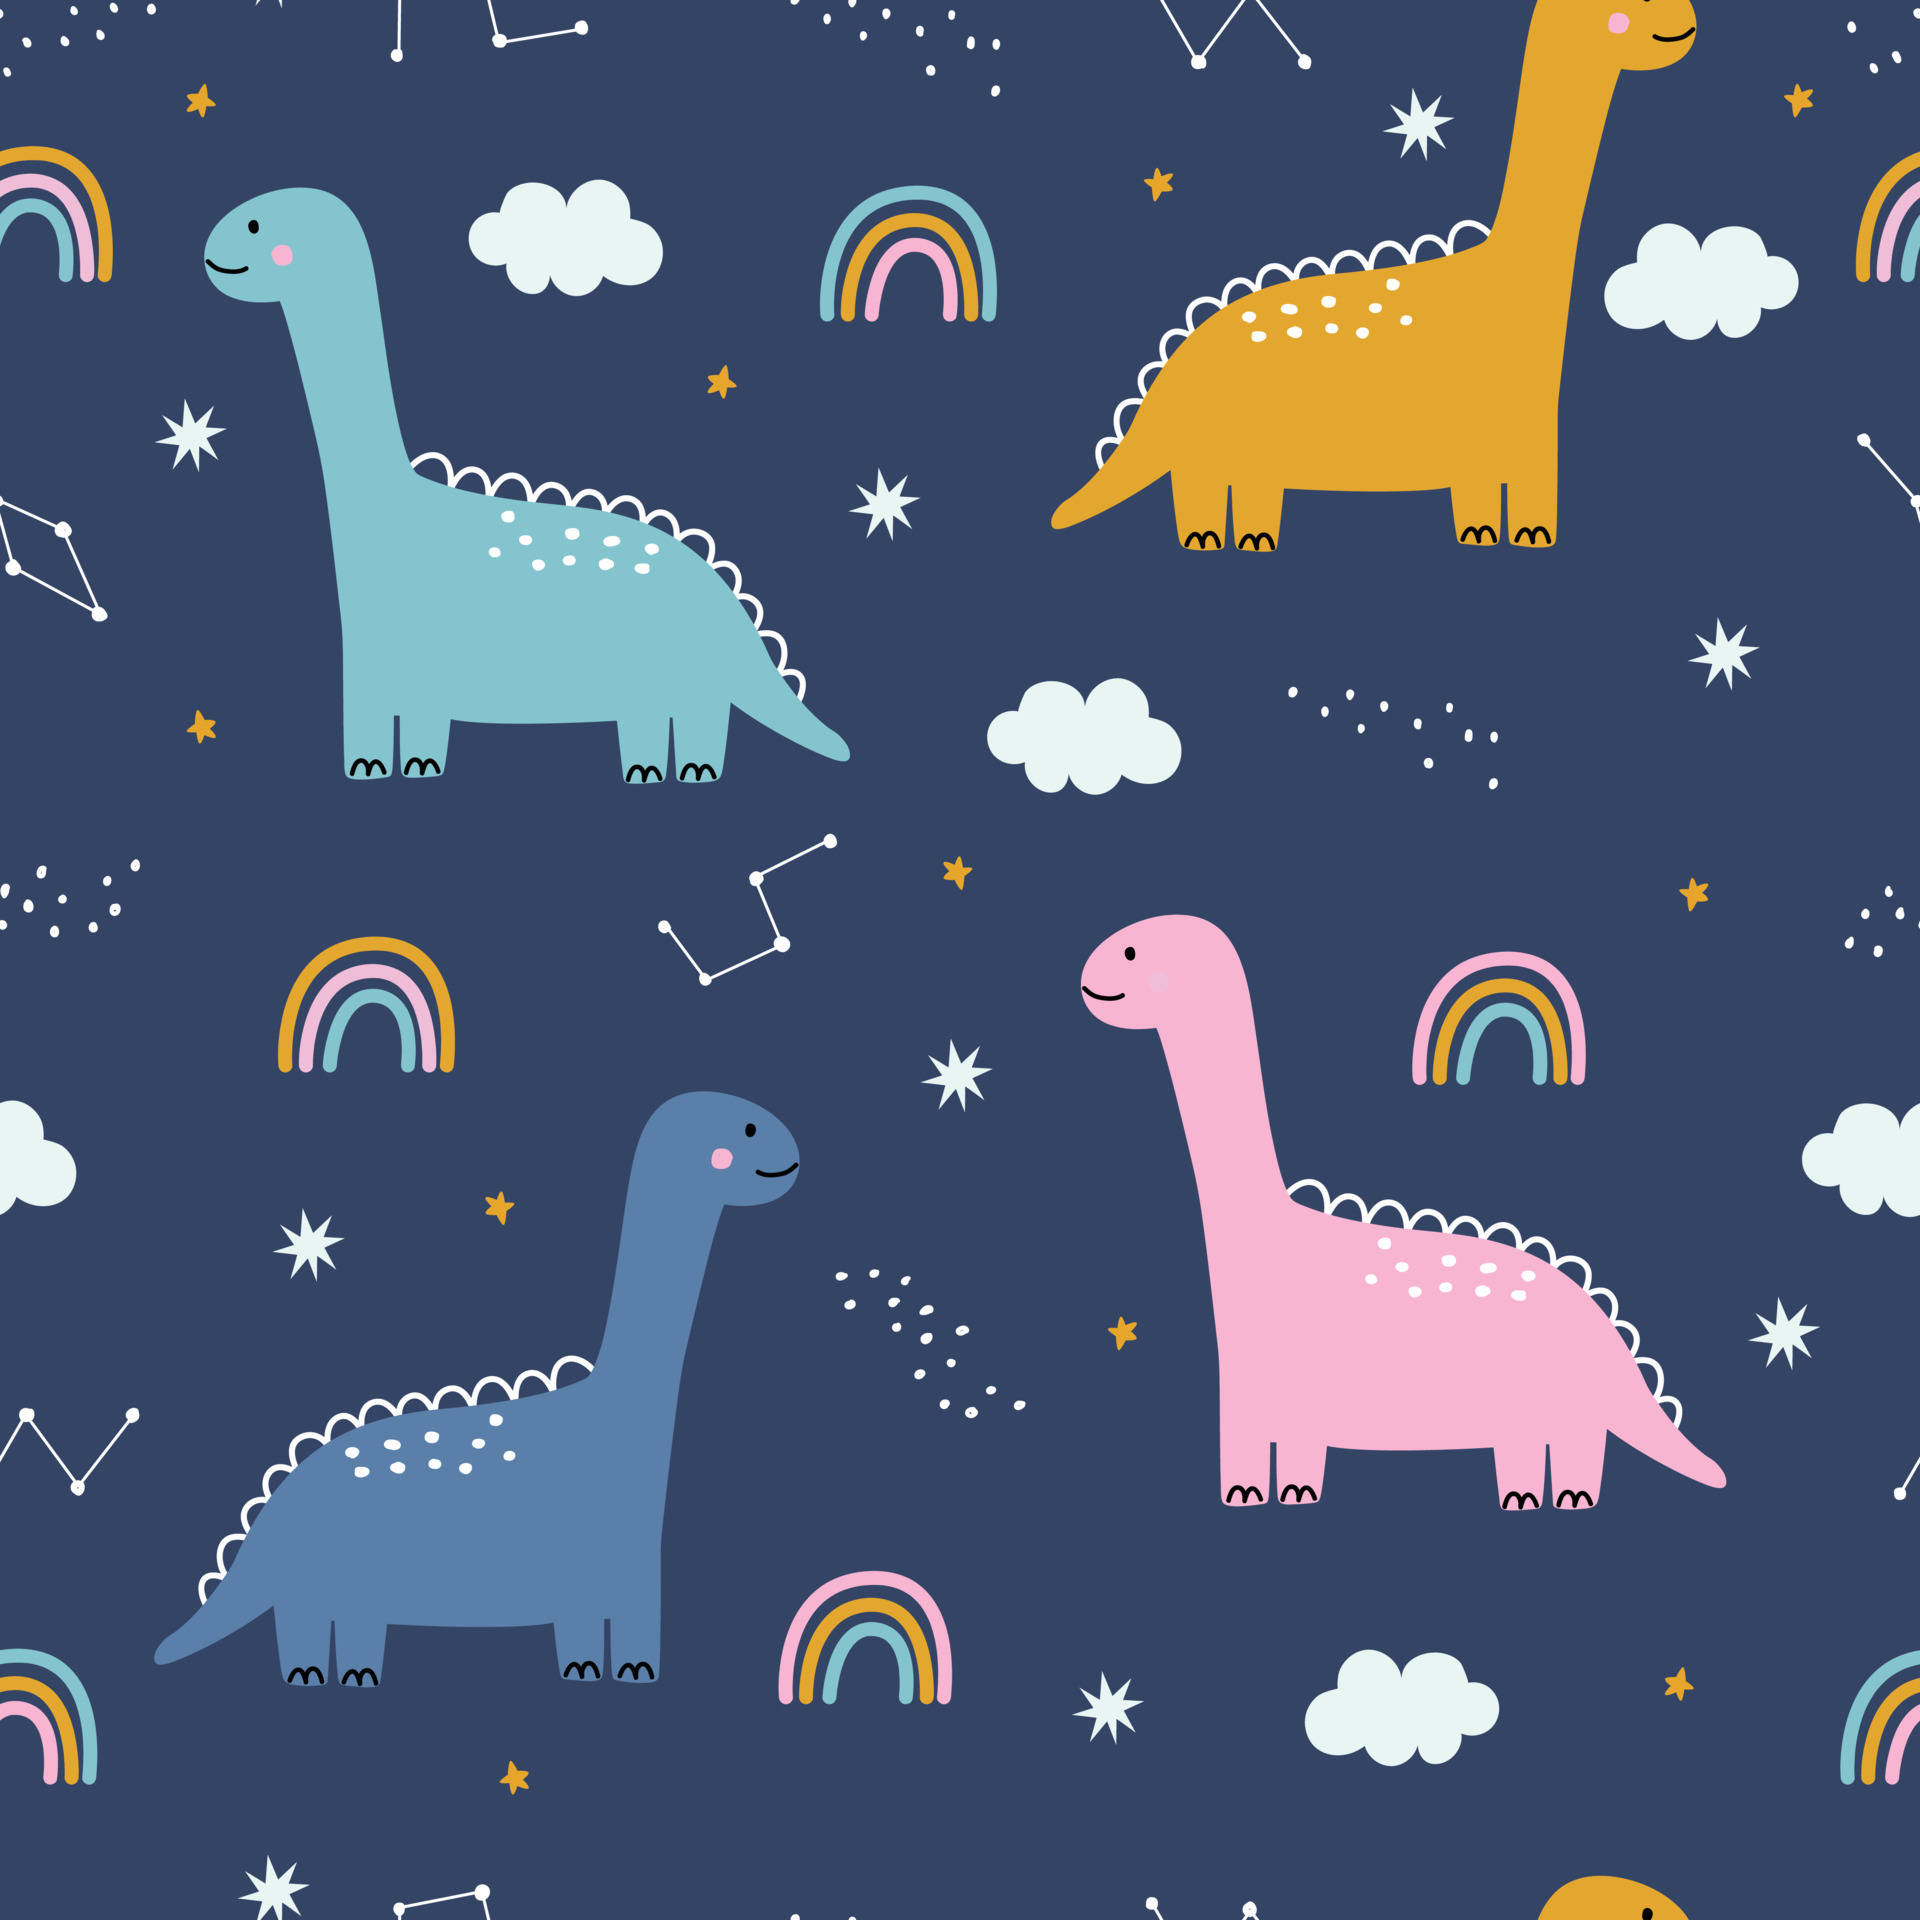 Vis din sødme med dette mønster med en sød dinosaur. Wallpaper